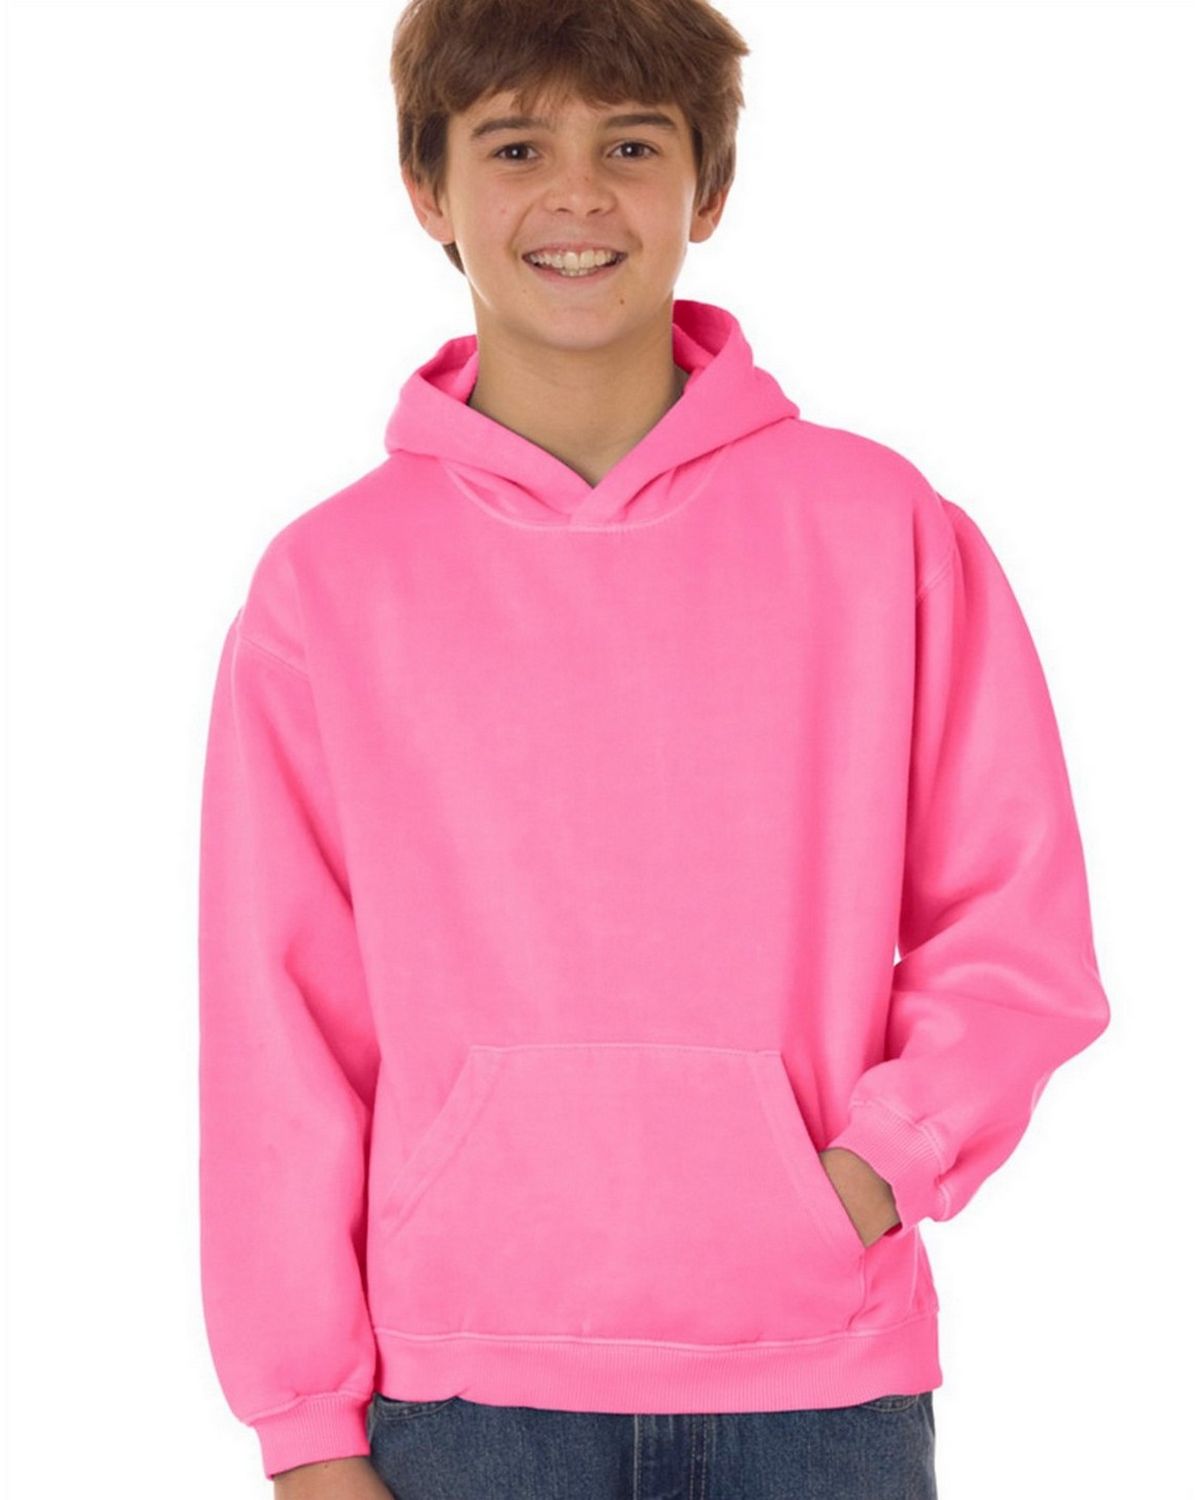 Chouinard 8755 Youth Hooded Sweatshirt - ApparelnBags.com